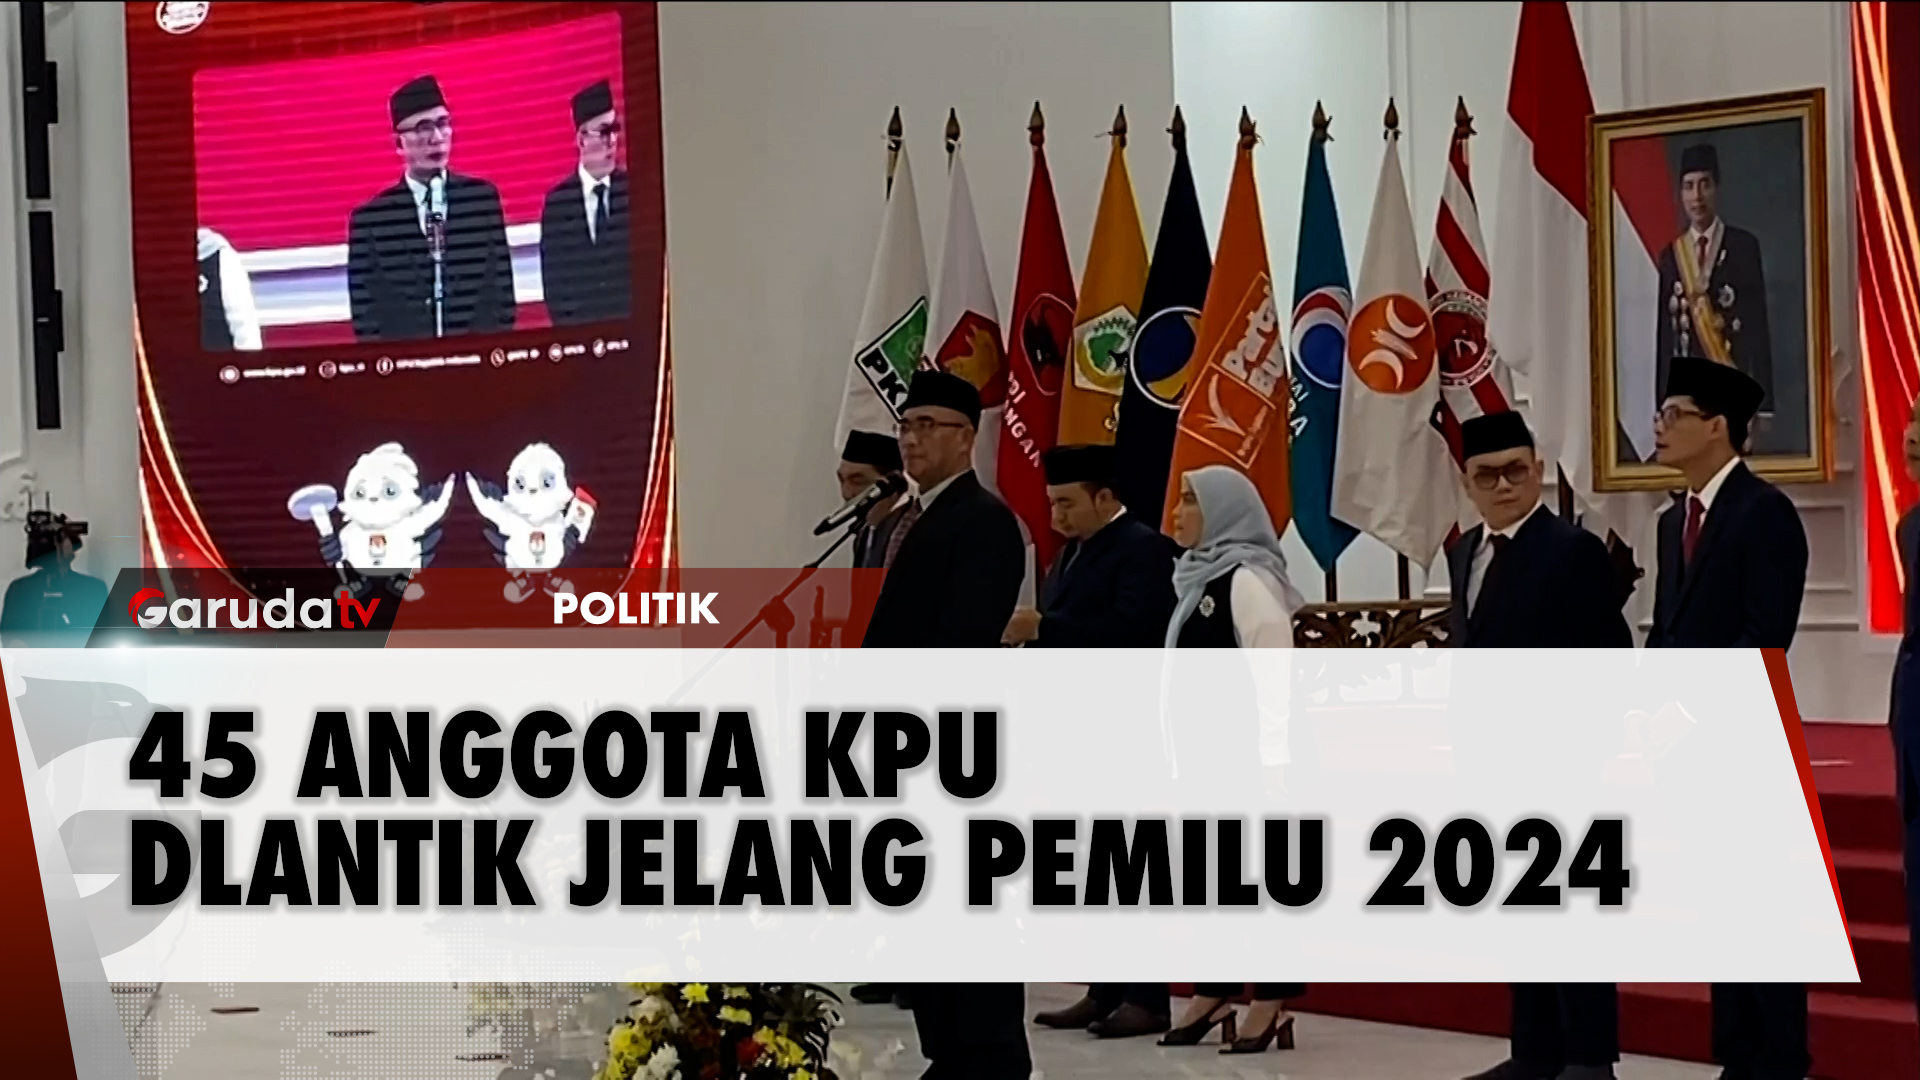 KPU Lantik 45 Anggota Baru Jelang Pemilu 2024